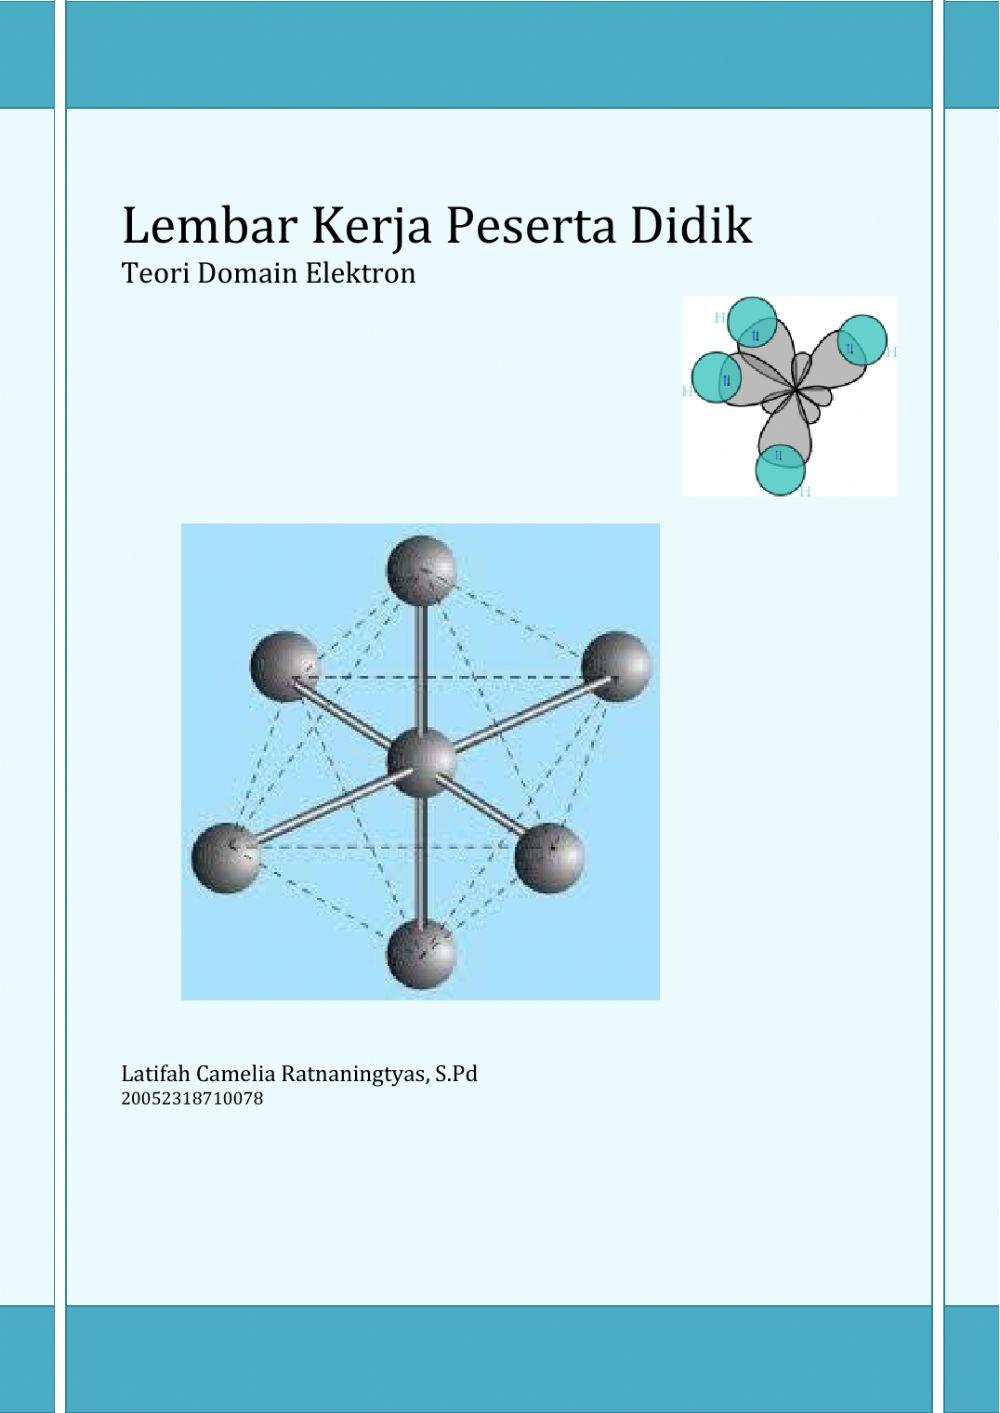 LKPD Teori Domain Elektron siklus 1